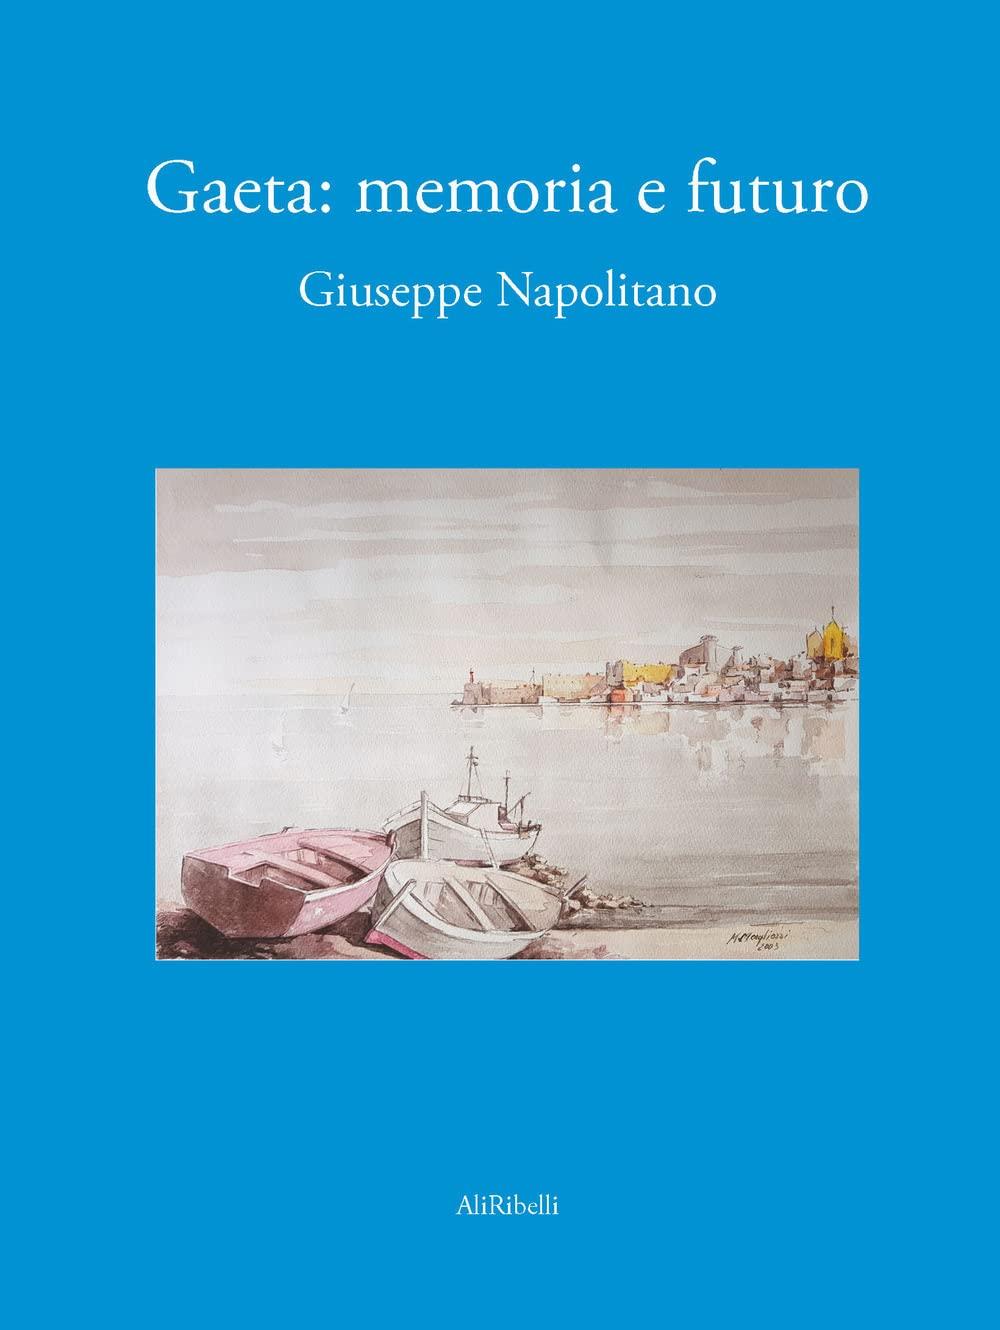 Libro "Gaeta: memoria e futuro" di Giuseppe Napolitano